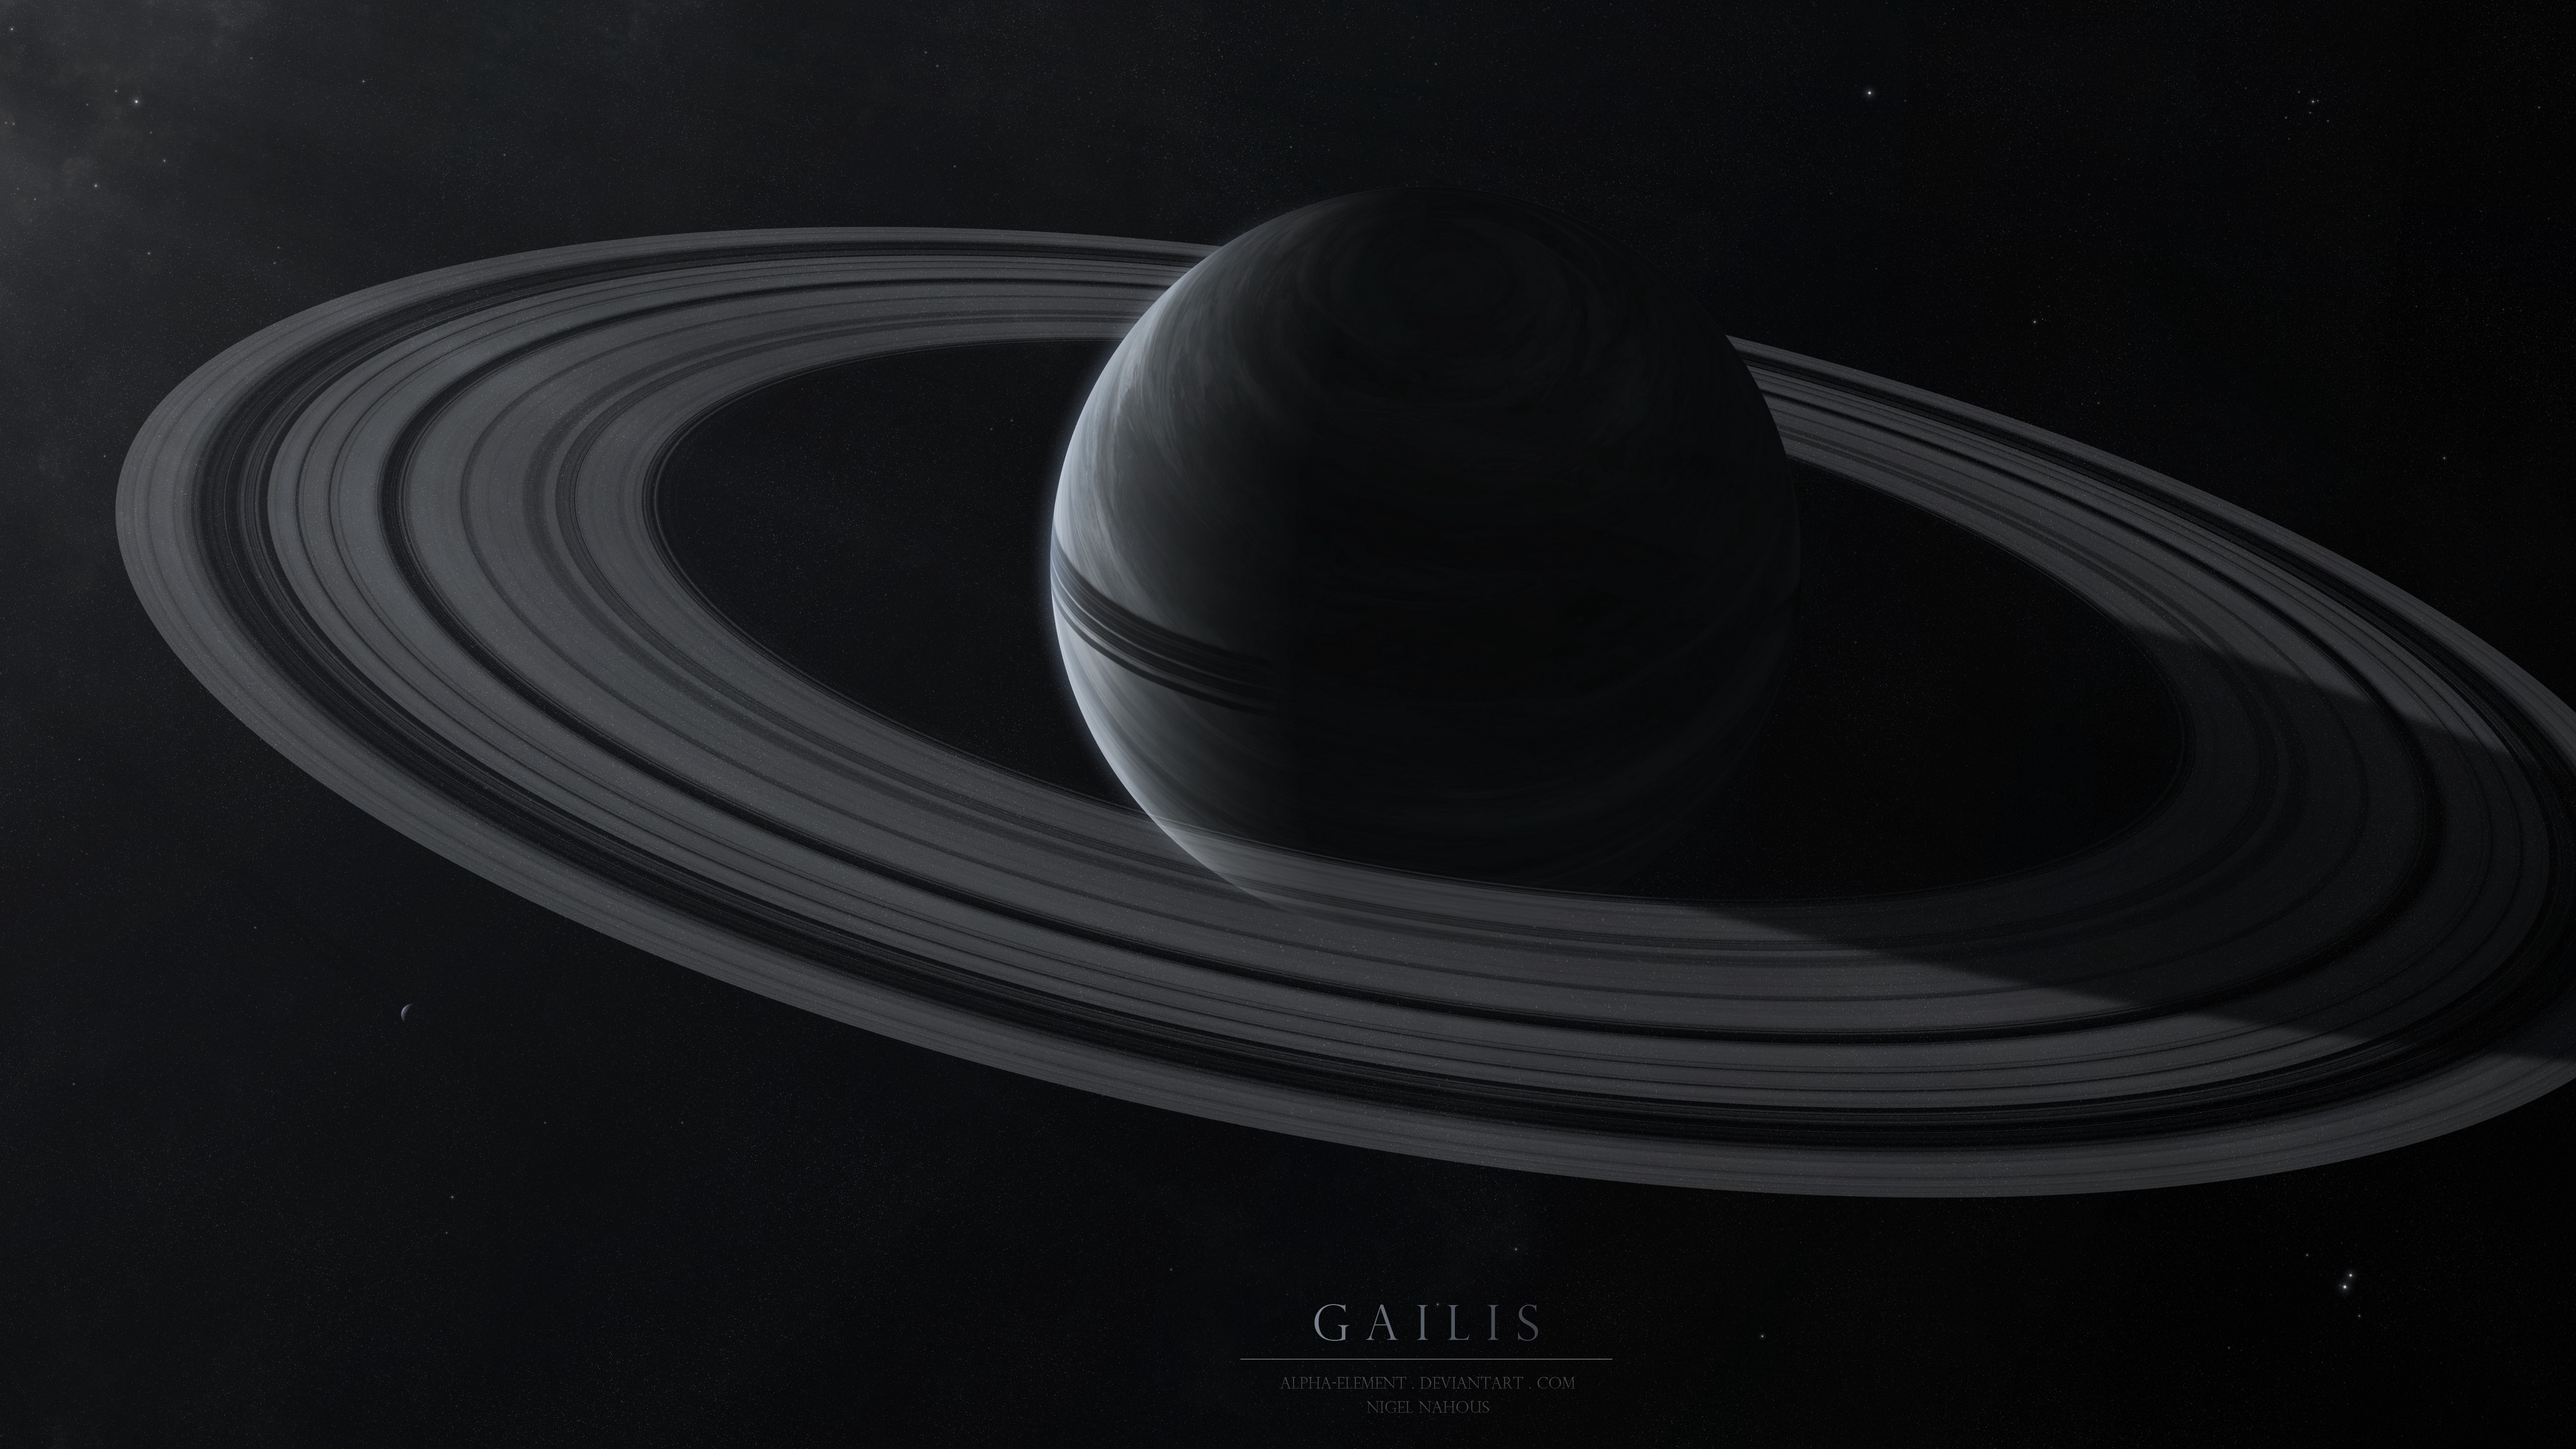 gailis planet rings stars space 4k 1536017106 - gailis, planet, rings, stars, space 4k - Rings, Planet, gailis